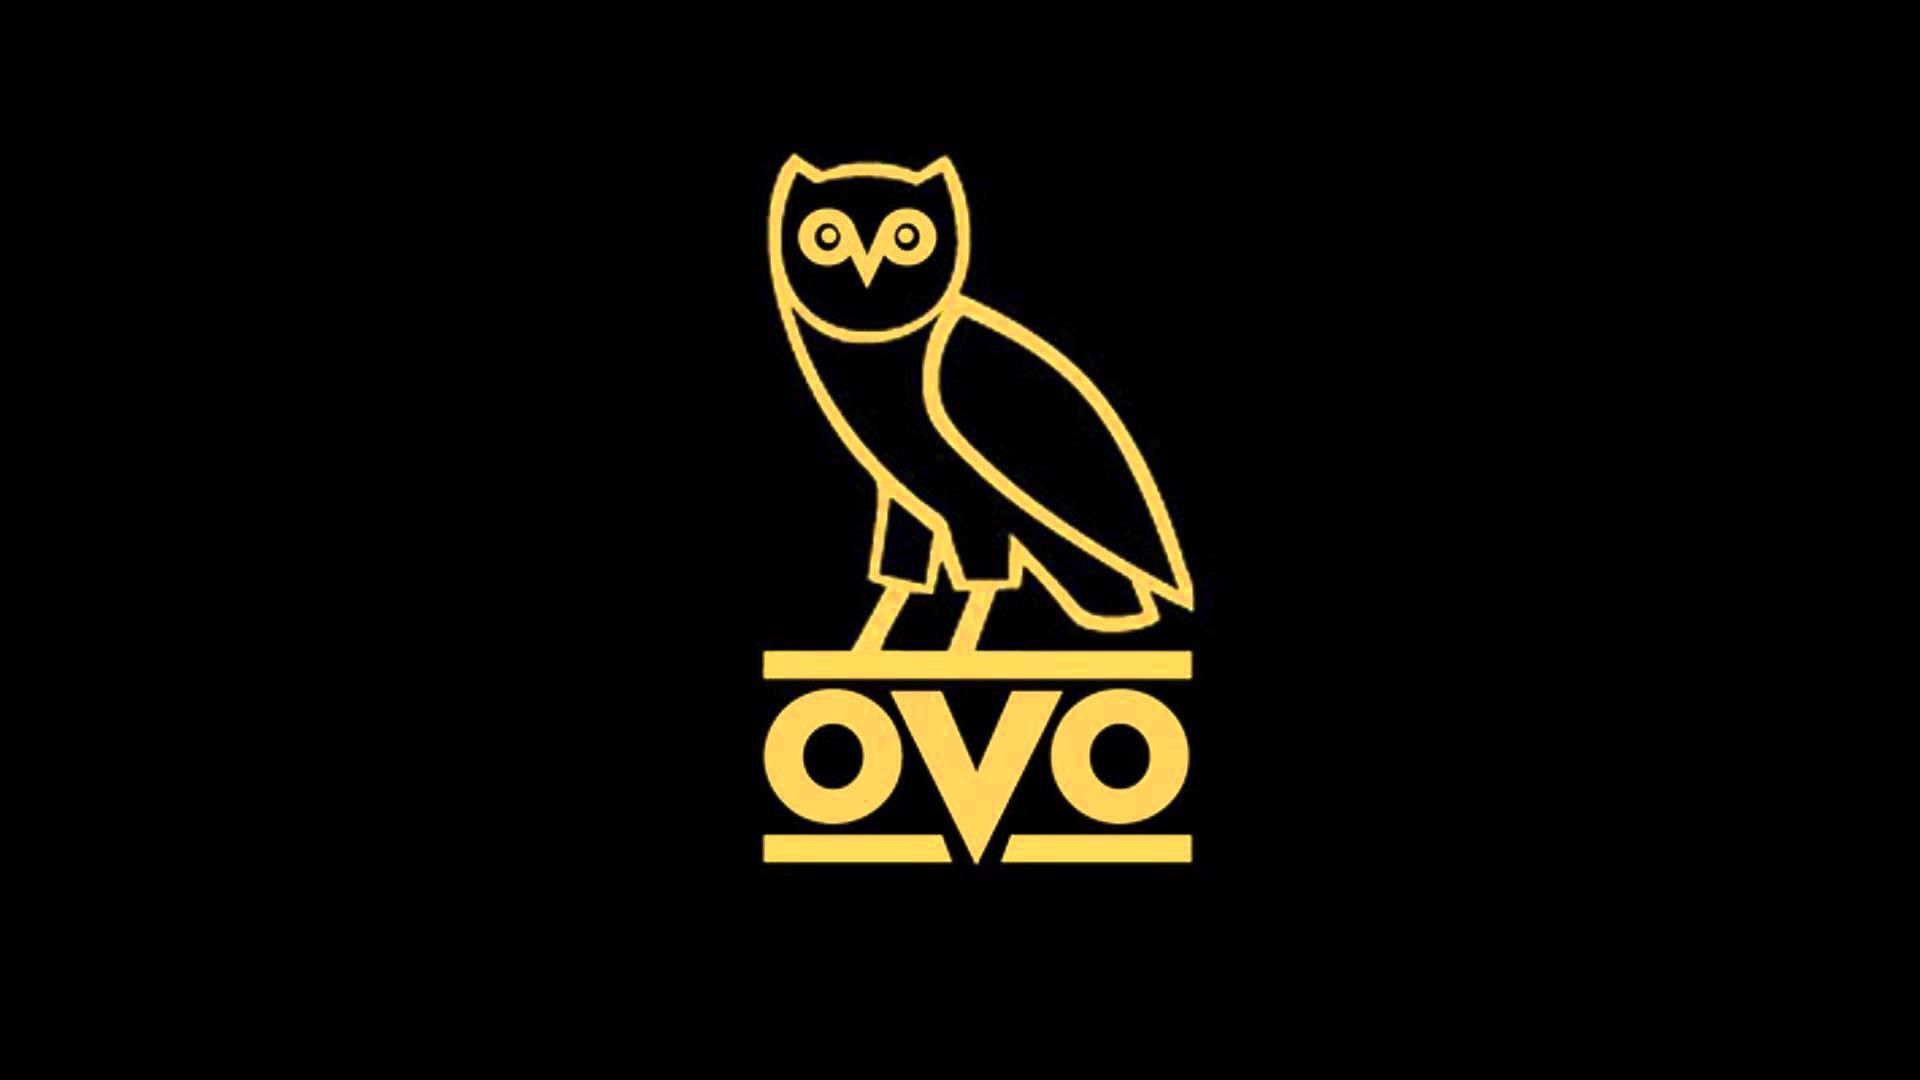 iPhone 7 Drake Owl Wallpaperwalpaperlist.com